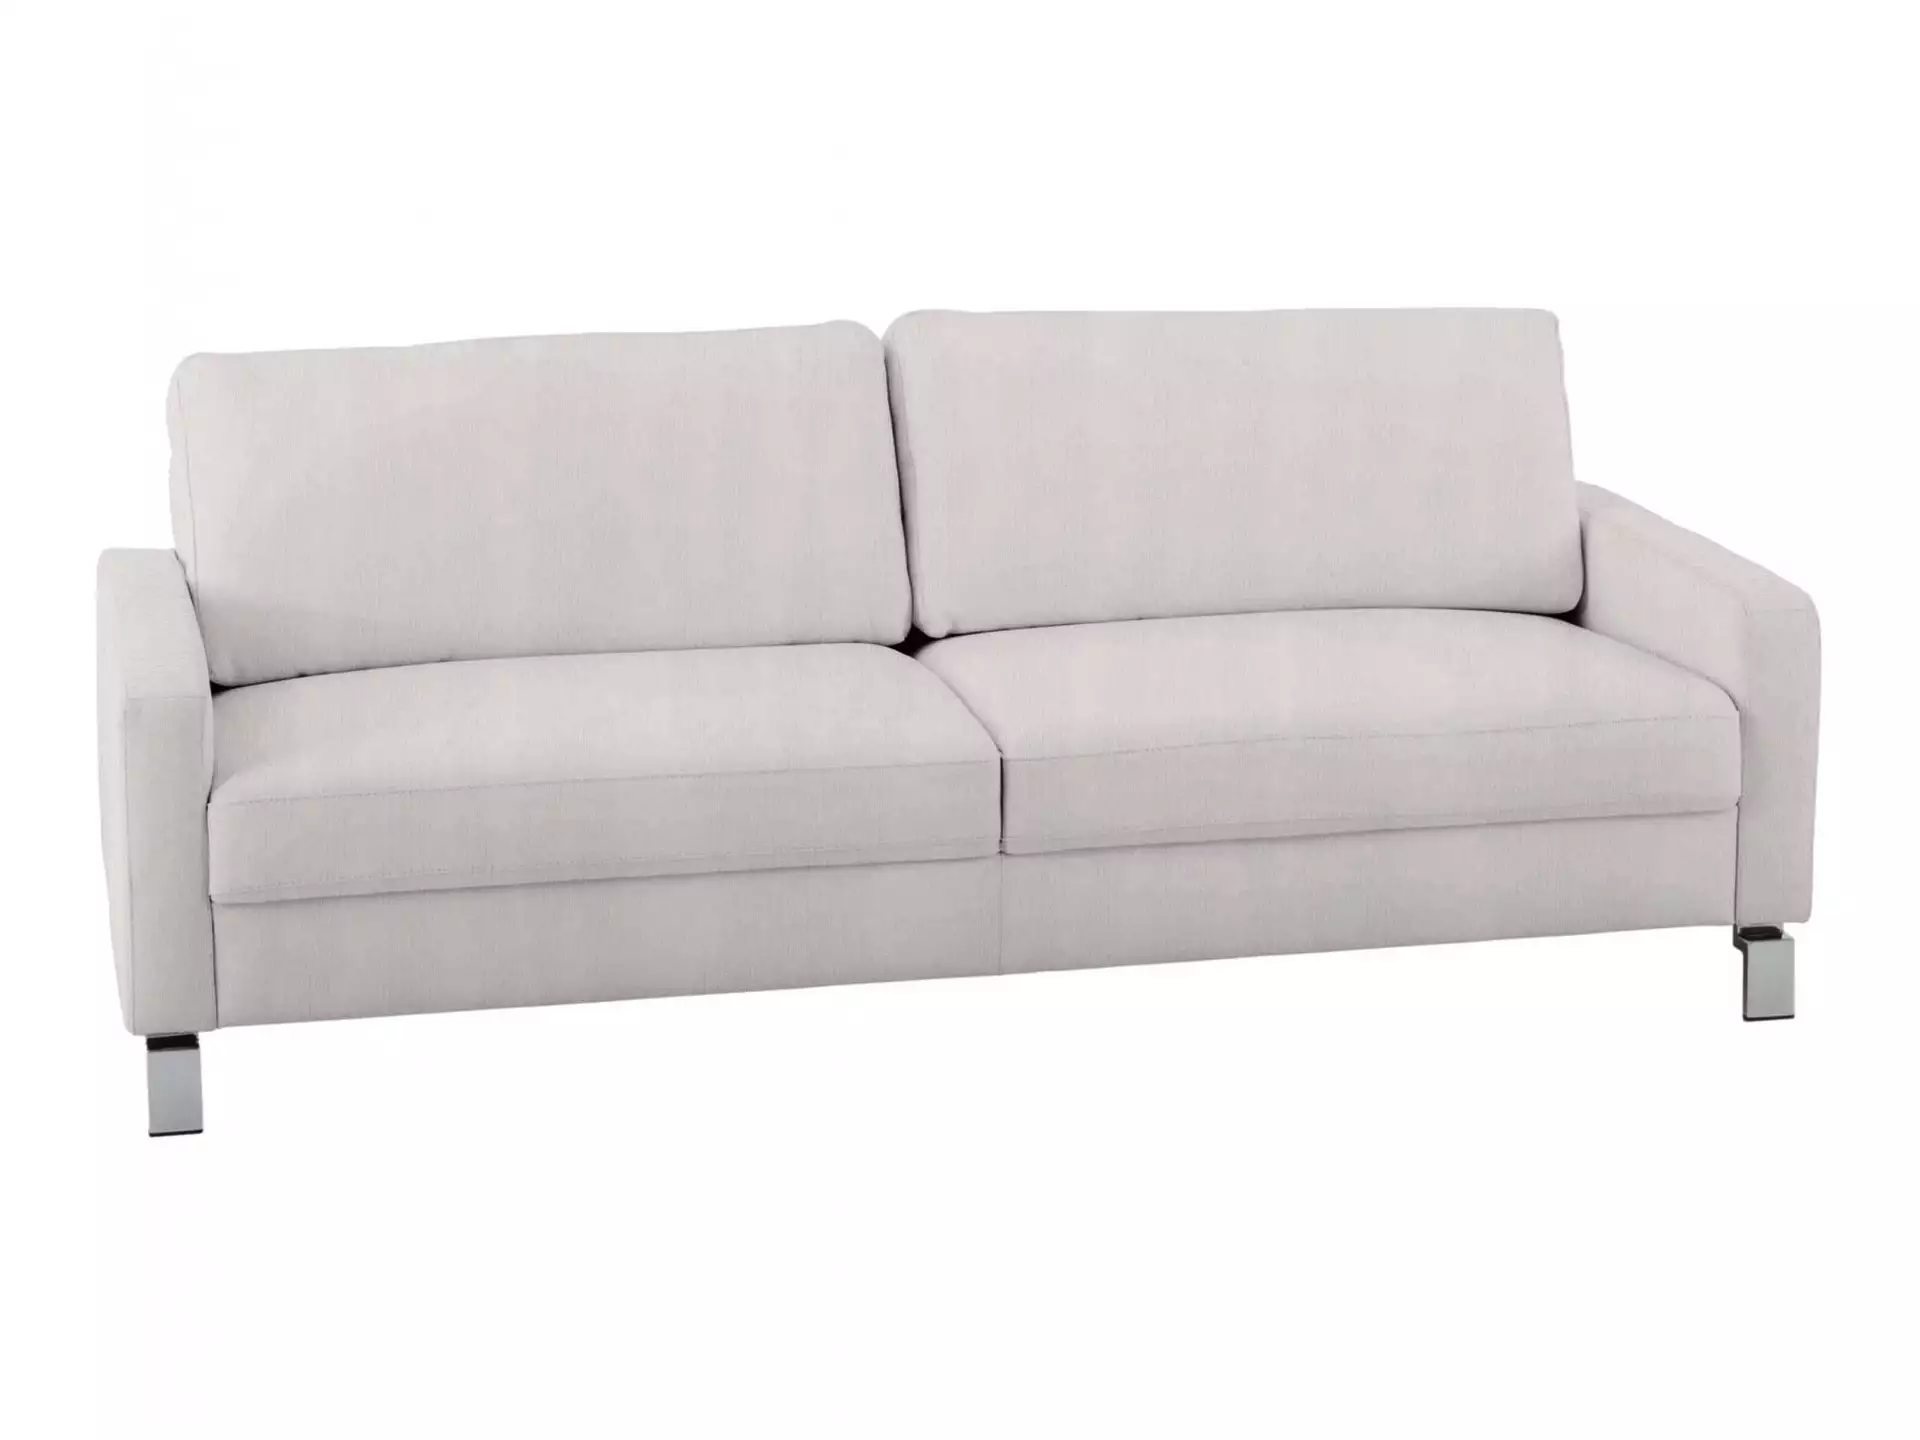 Sofa Interims Basic B: 204 cm Candy / Farbe: Silver / Material: Stoff Basic